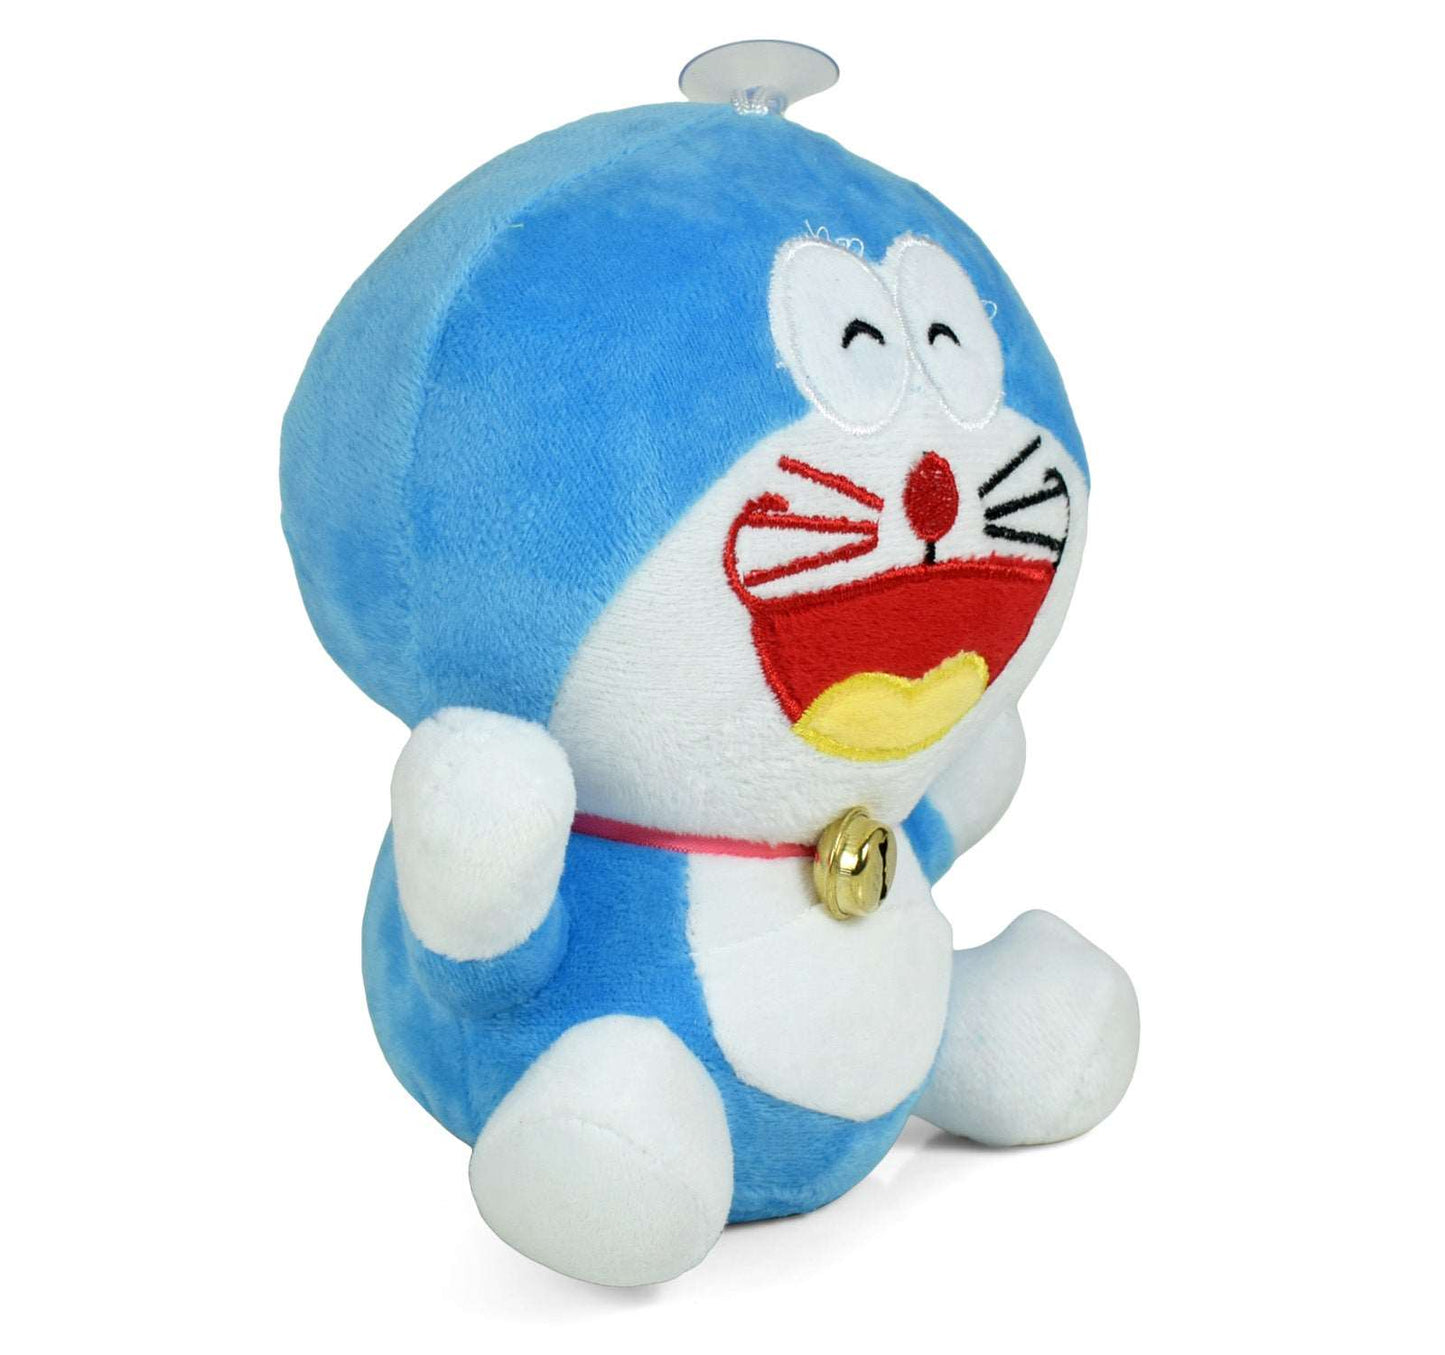 AZi® Hanging Doremon Cute Soft Stuffed Plush Animal Toy for Girls & Boys Kids Babies Birthday Gift Home Decoration | 22 cm | Blue